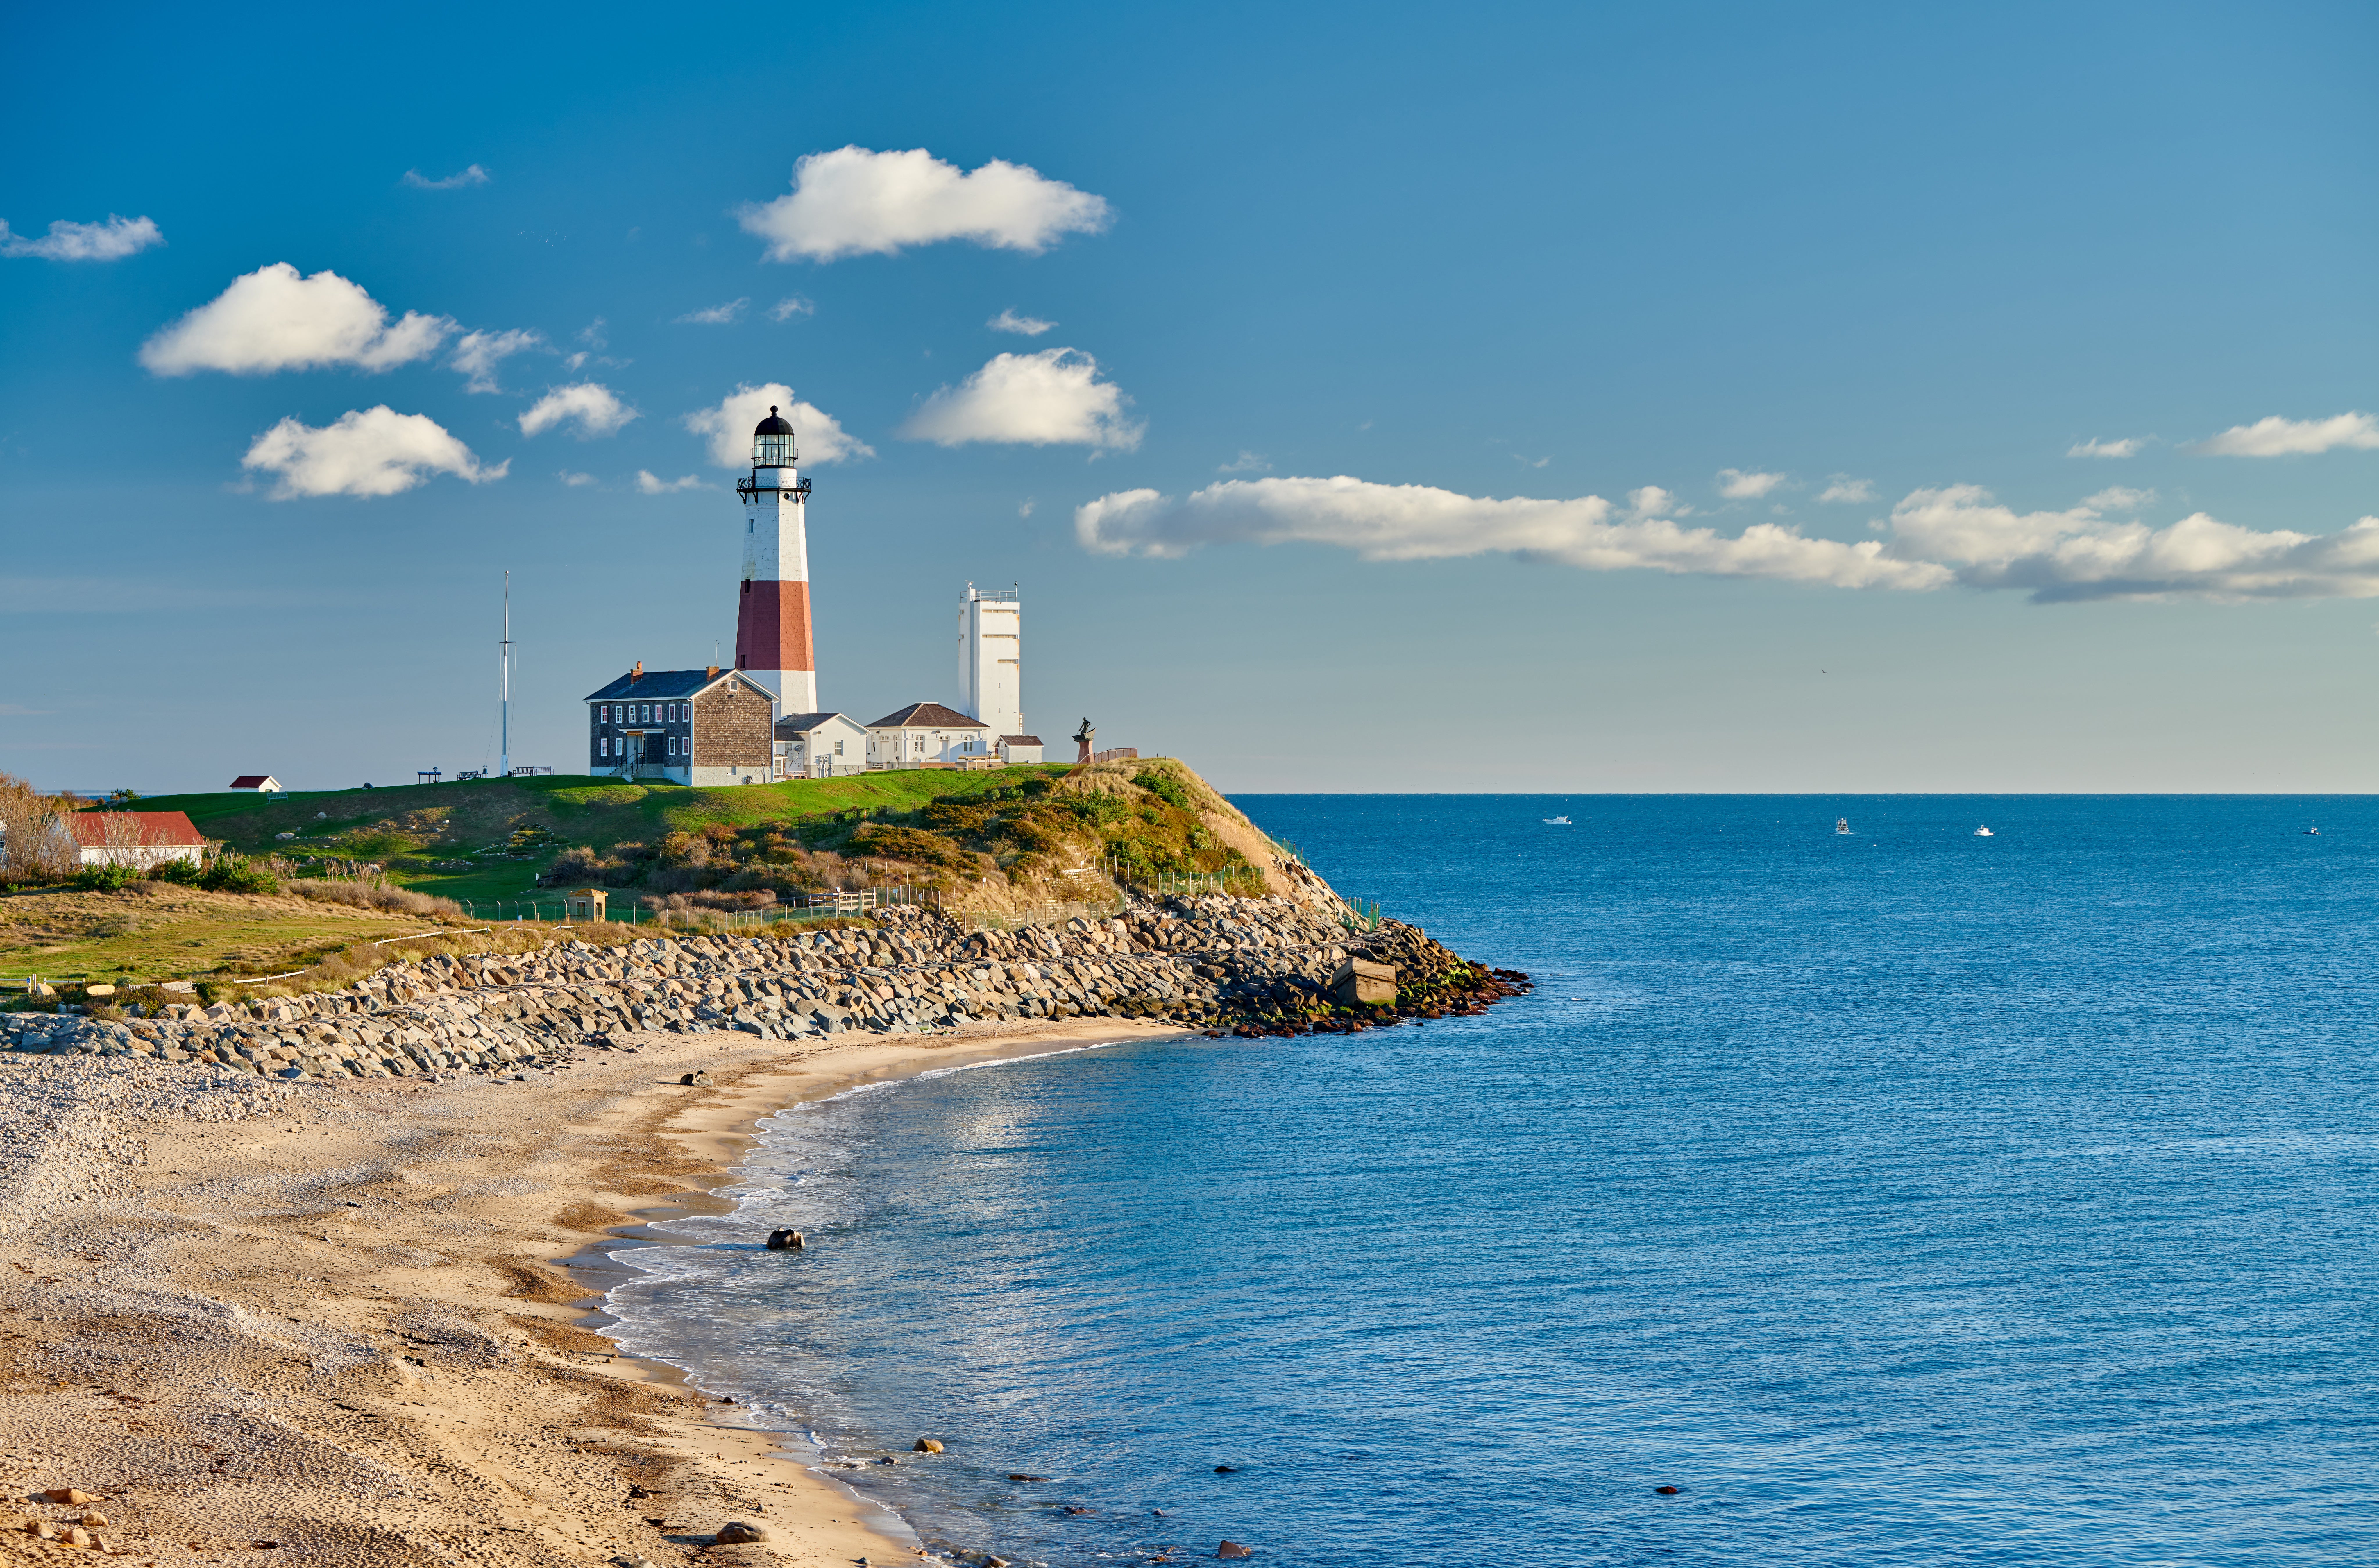 The Montauk Lighthouse and beach, Long Island, New York.